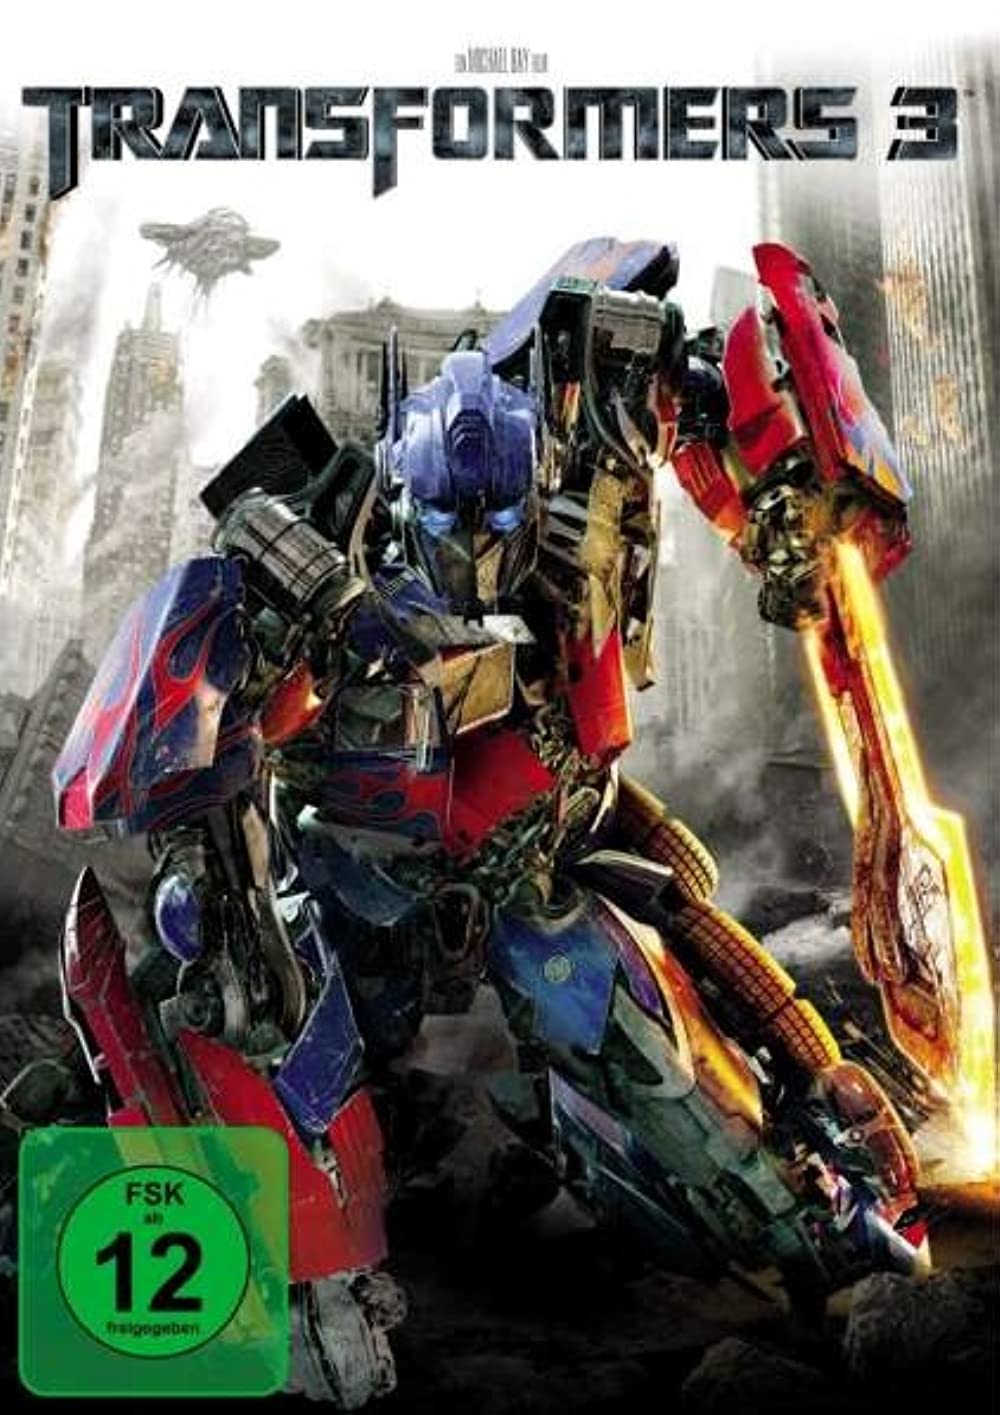 Filmbeschreibung zu Transformers 3